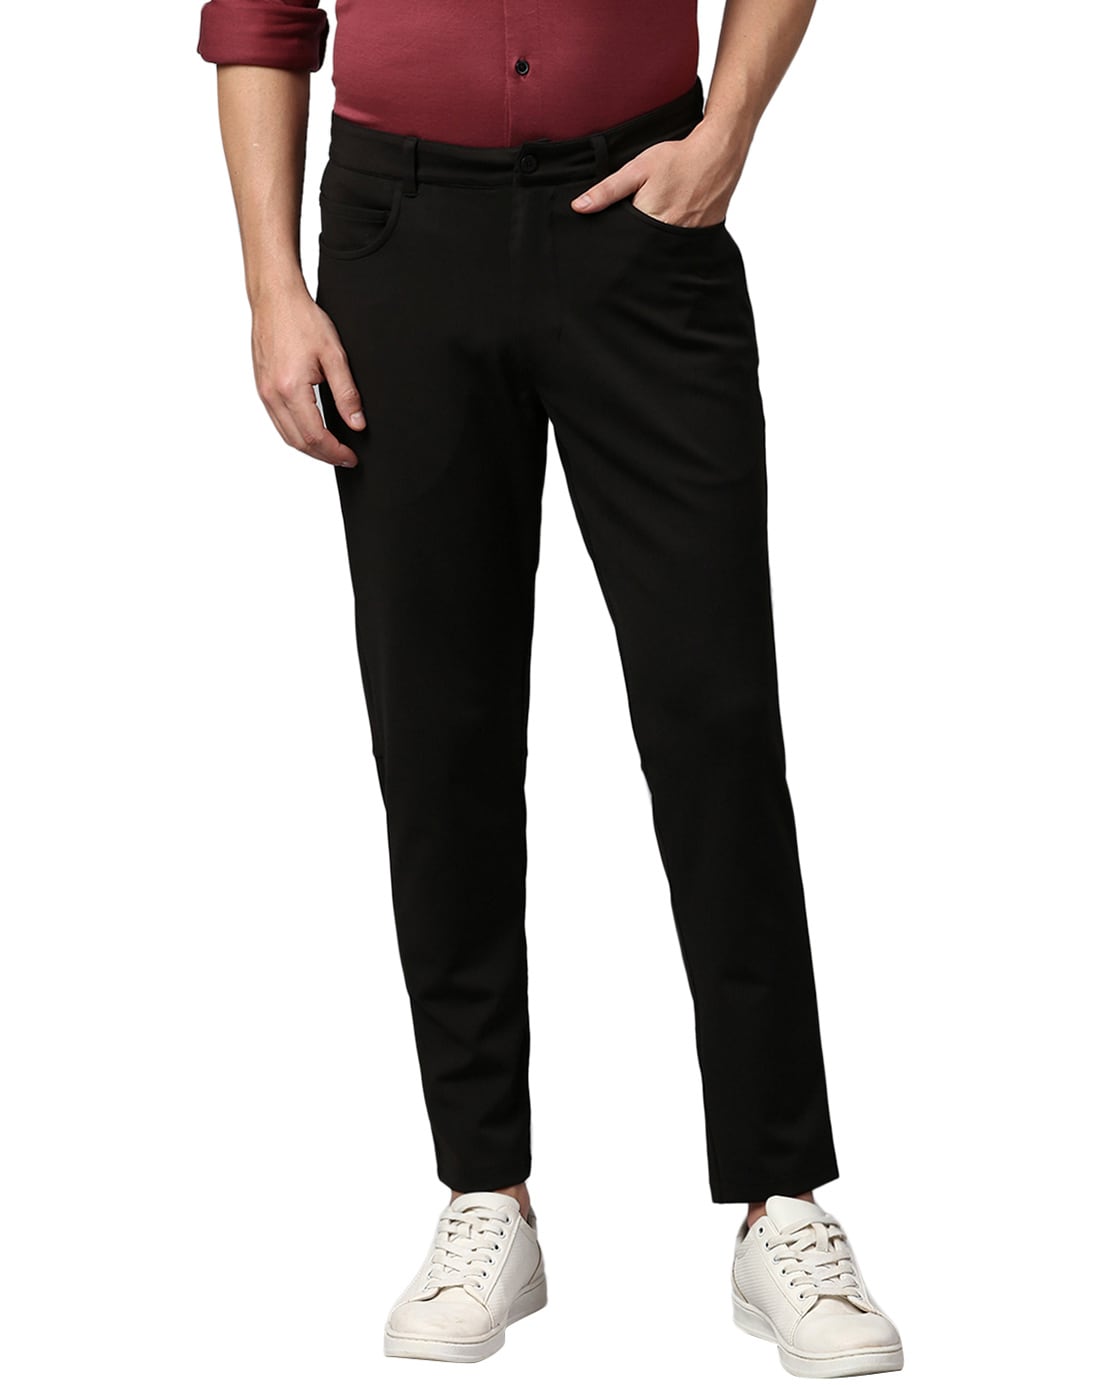 MOGU Ankle-Length Dress Pants for Men Slim Fit Cropped Trousers | eBay